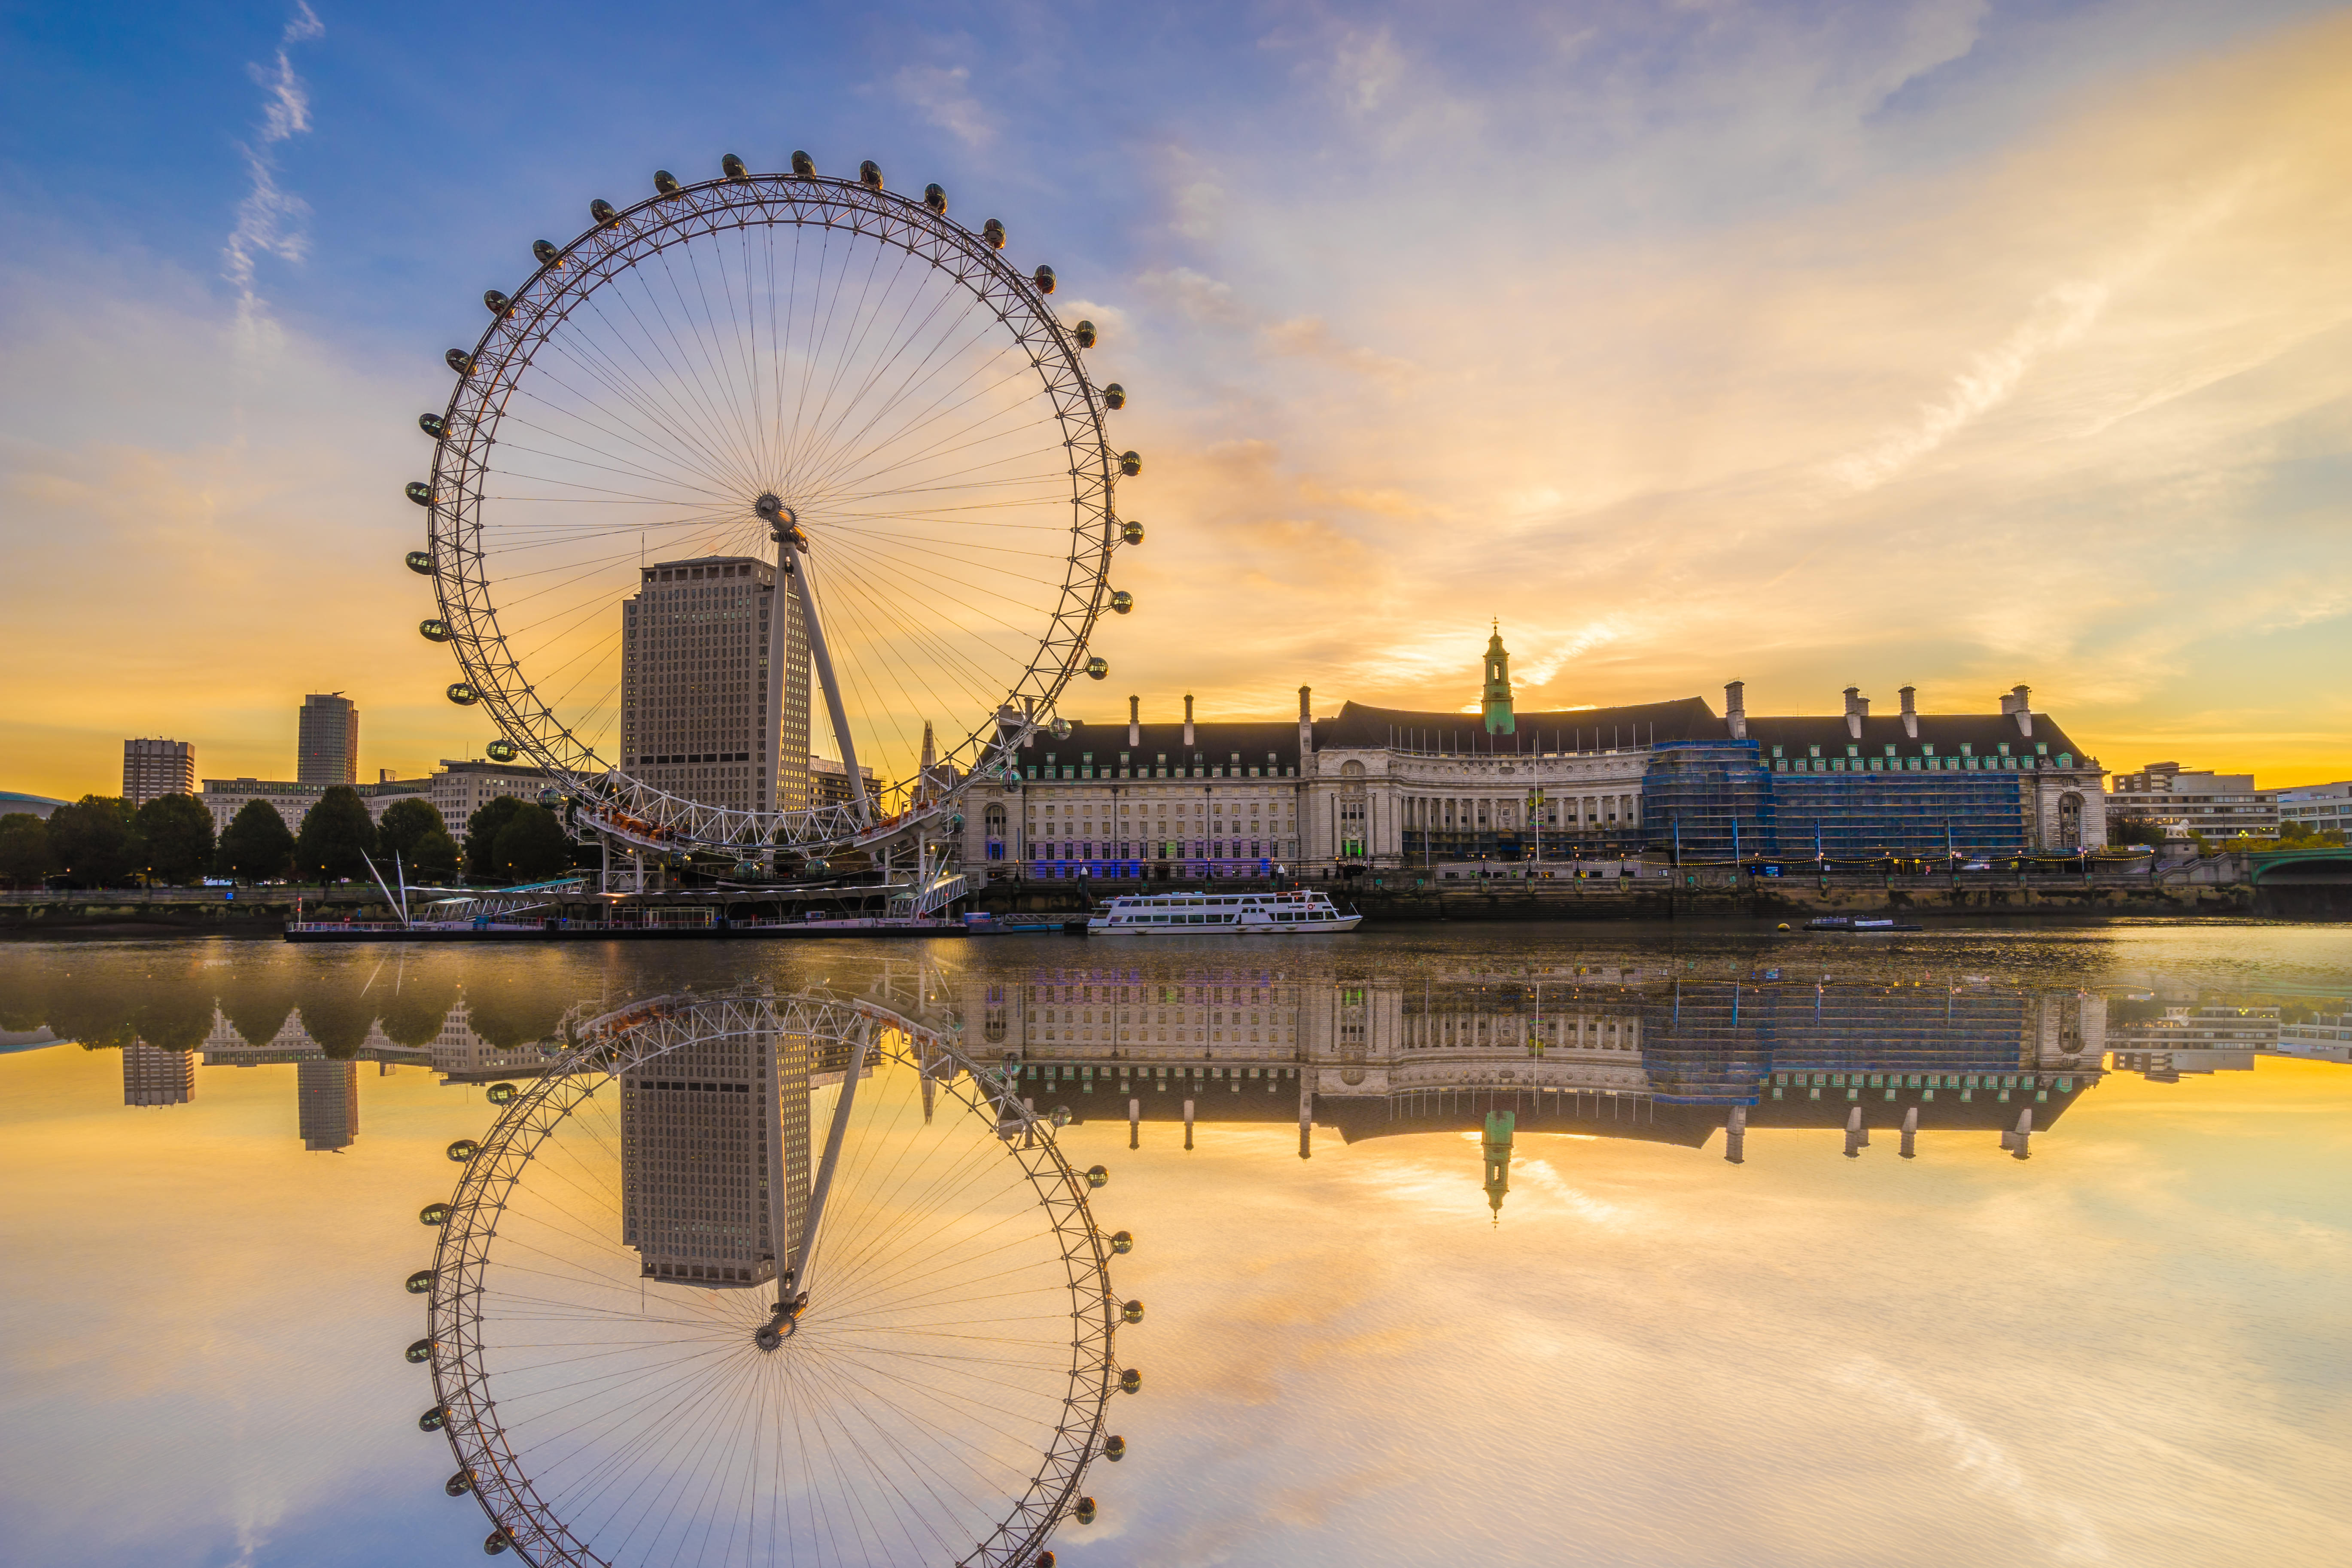 Experience the London Eye: